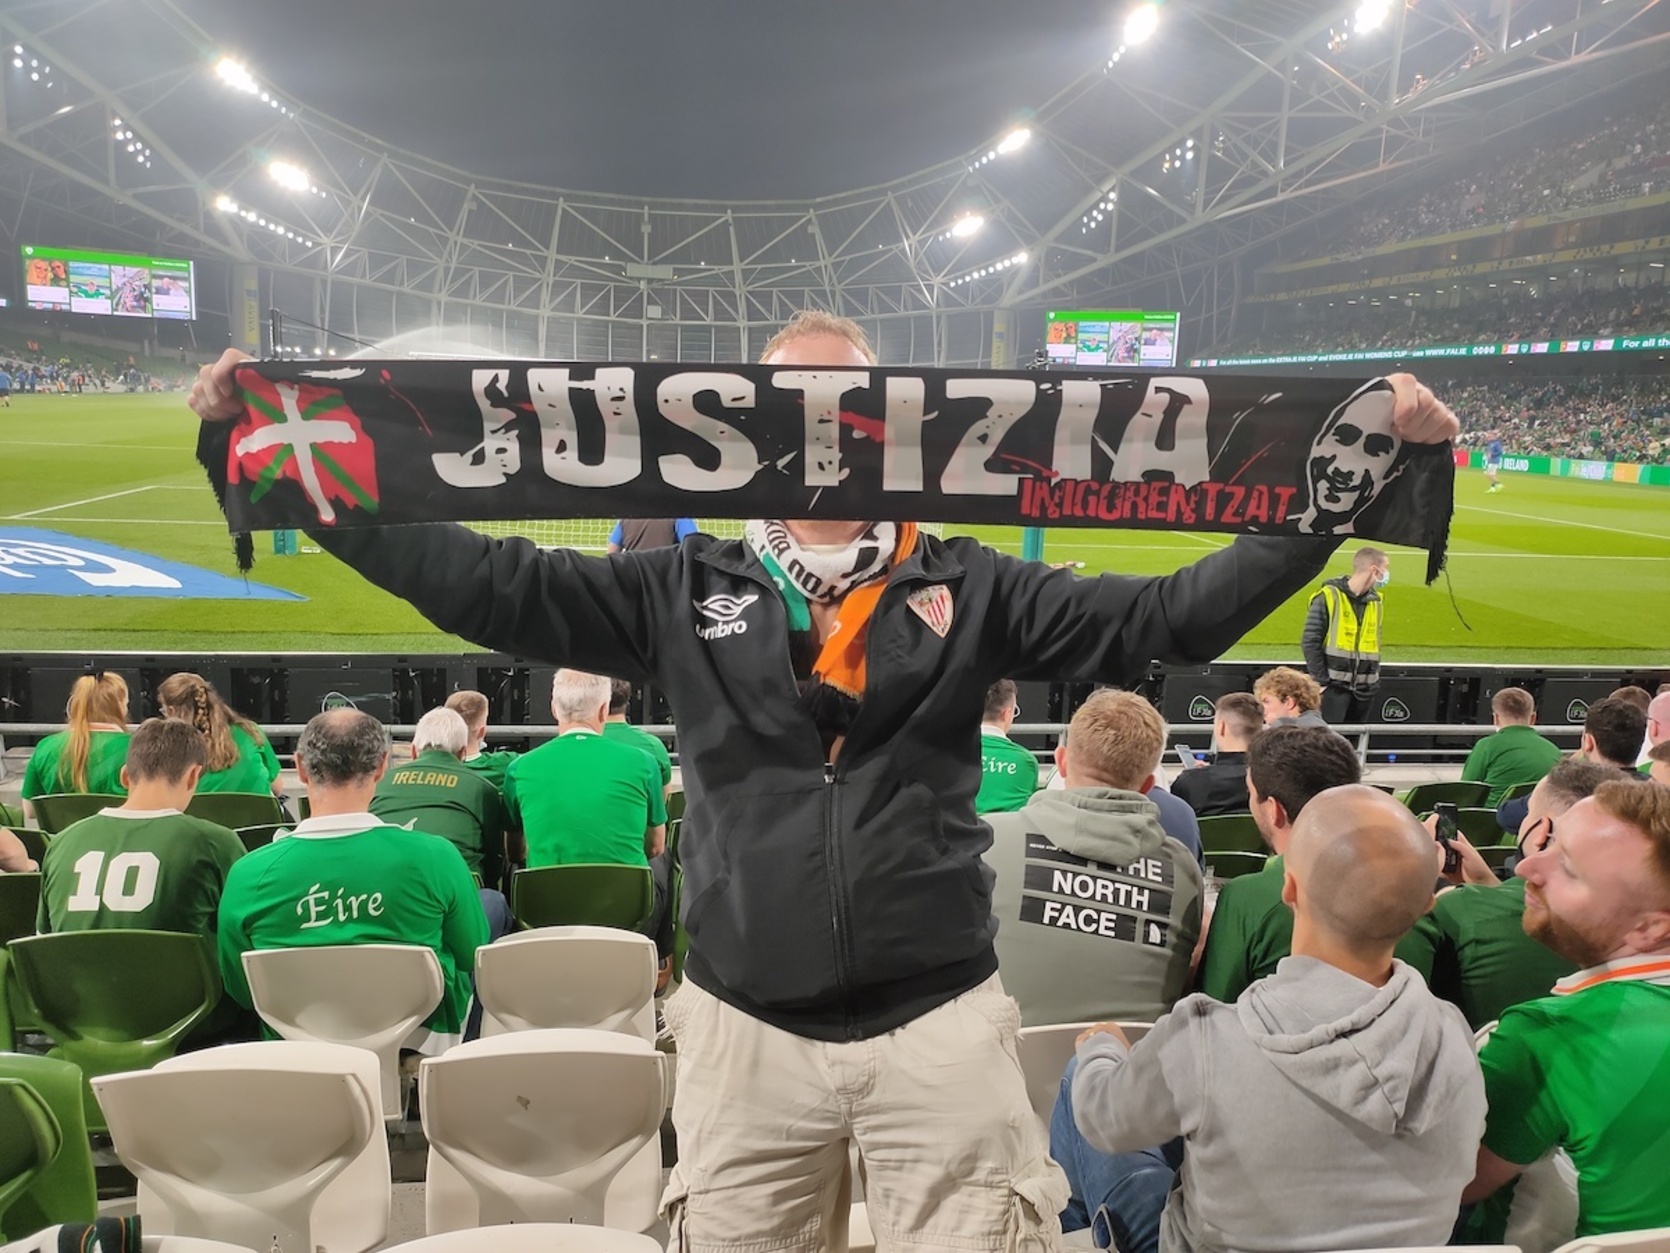 Bufanda de "Justizia Iñigorentzat" presente el Aviva Stadium. 